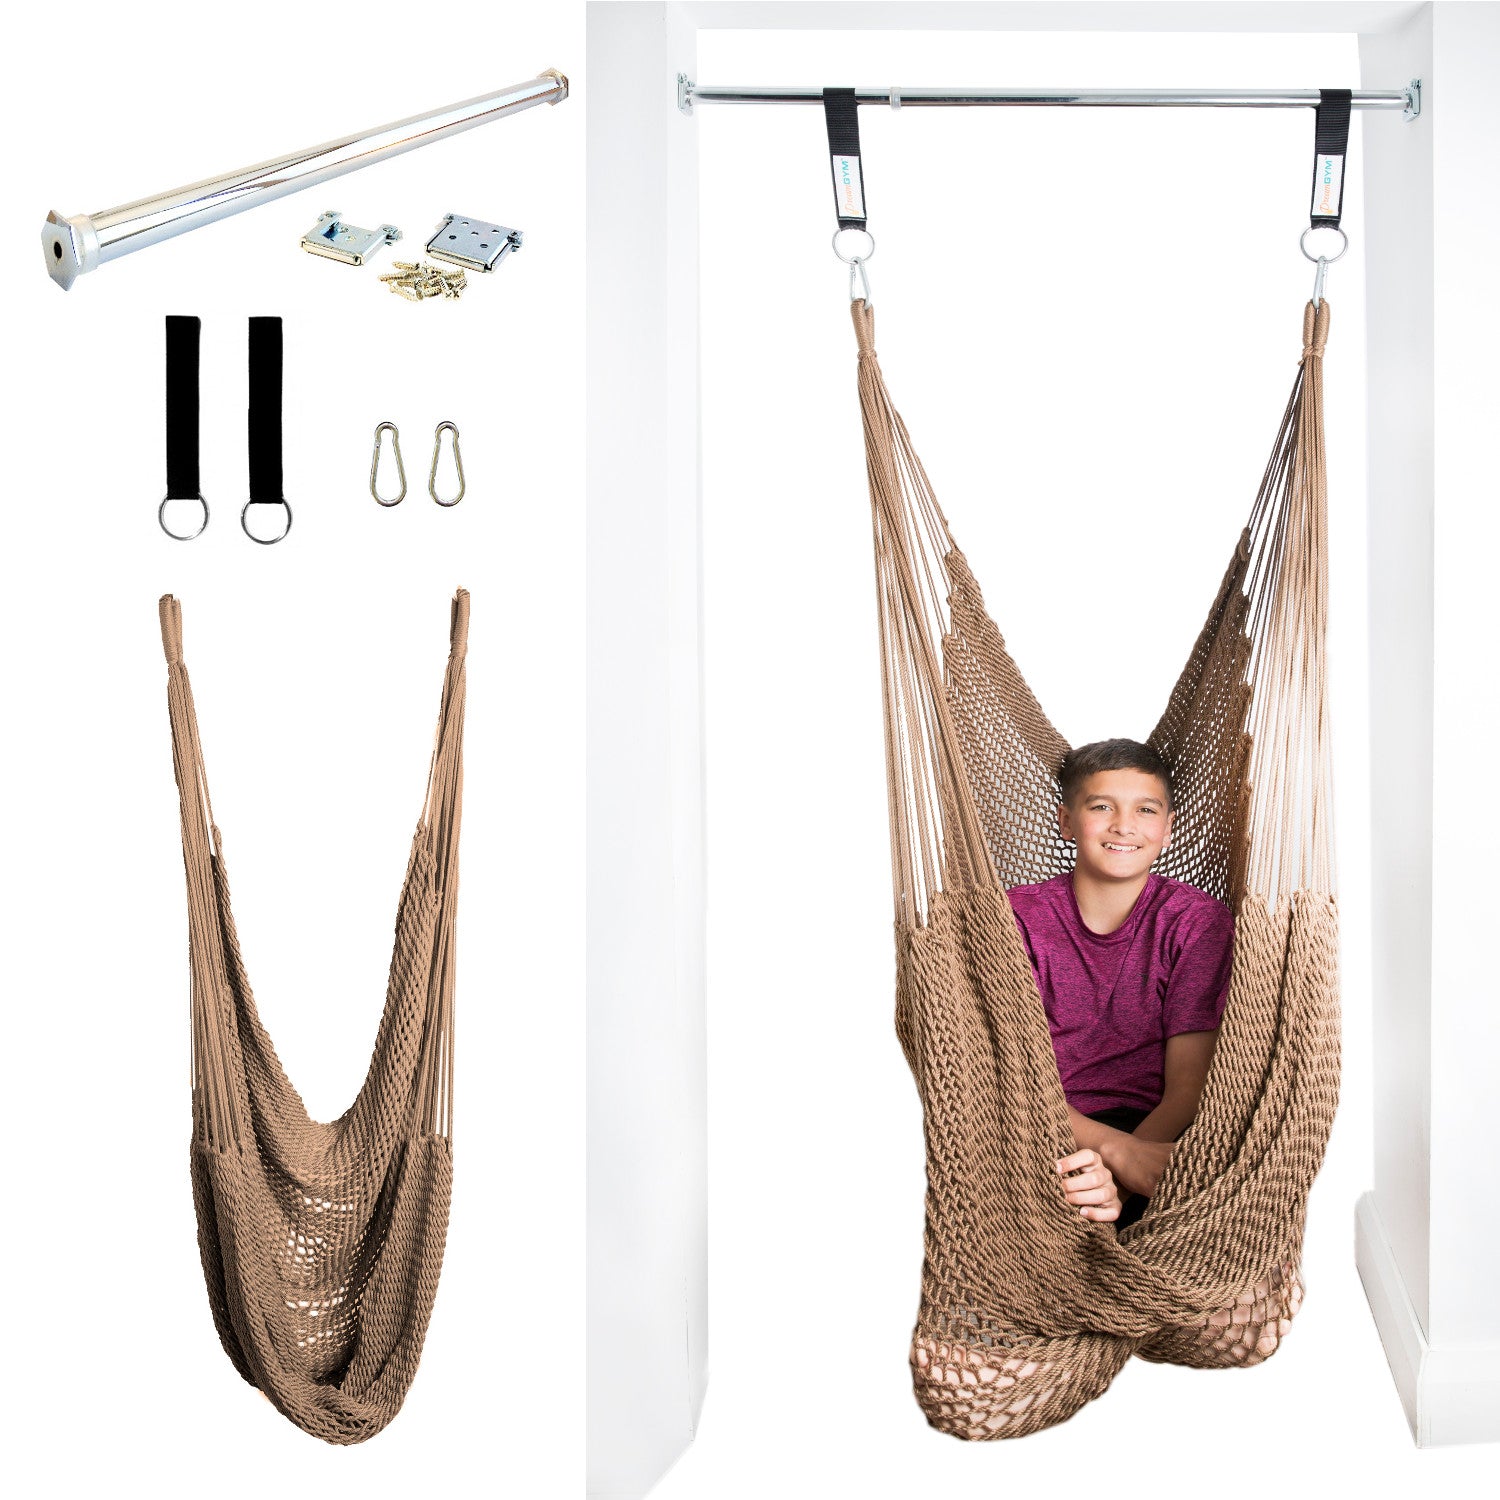 A boy is sitting in a brown hammock swing installed in a door frame.